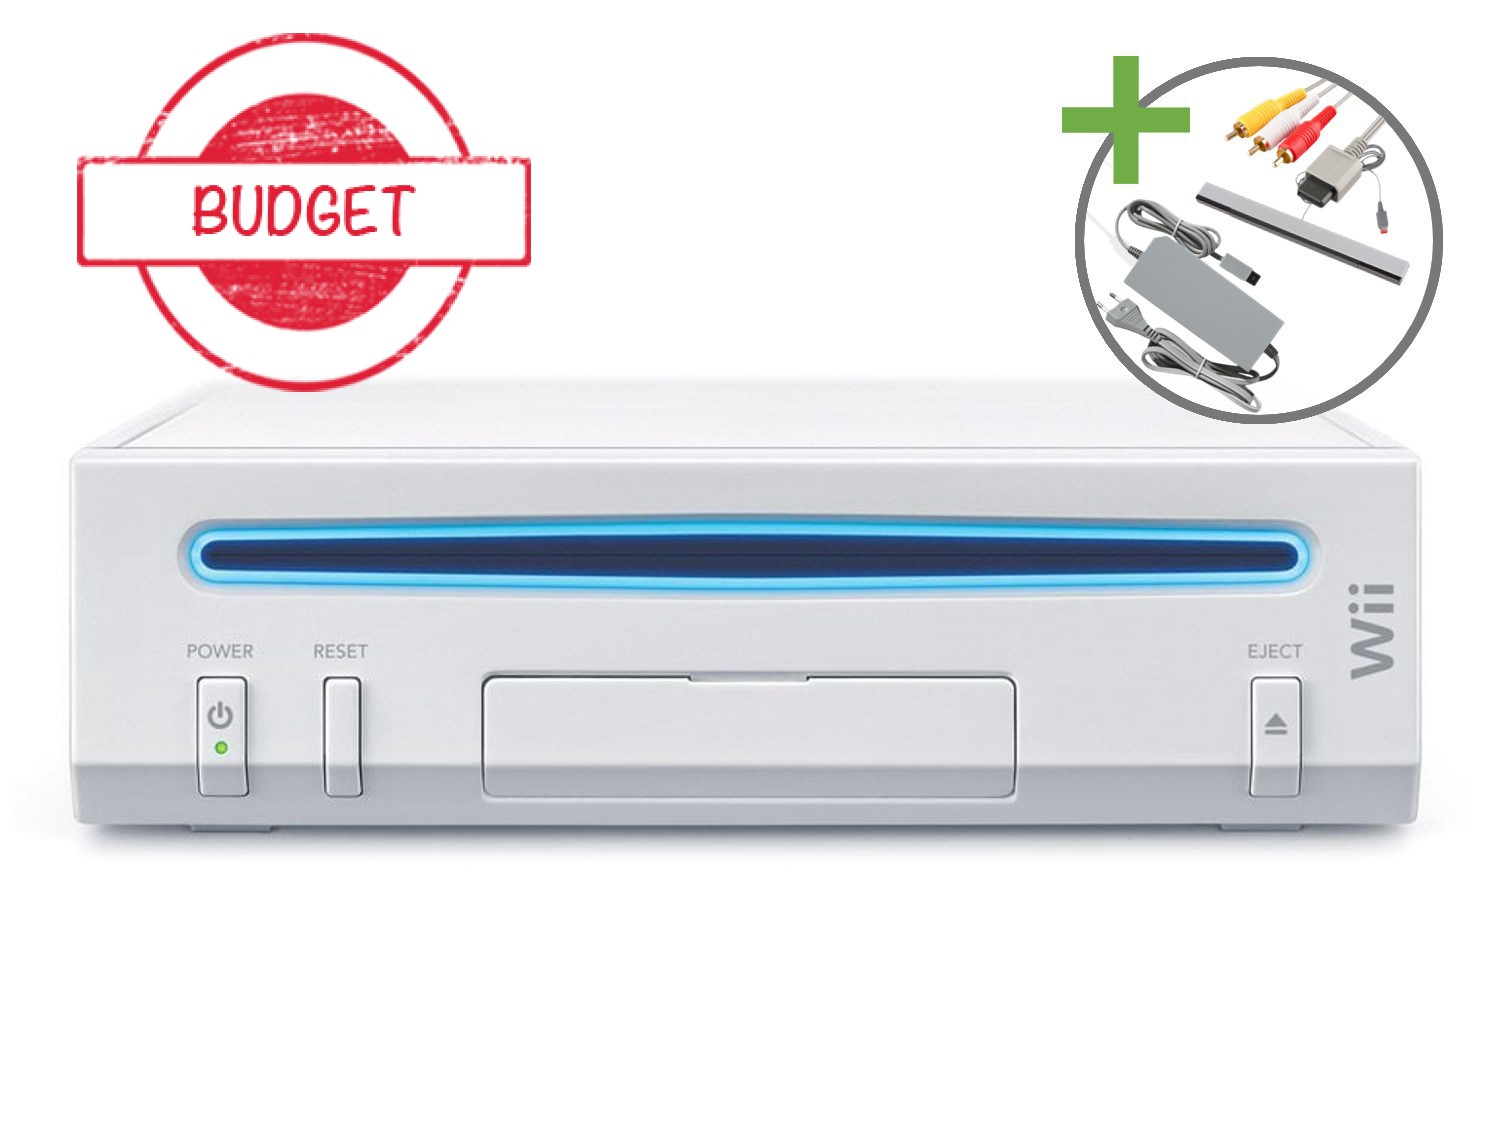 Nintendo Wii Starter Pack - Wii Sports Edition - Budget - Wii Hardware - 2